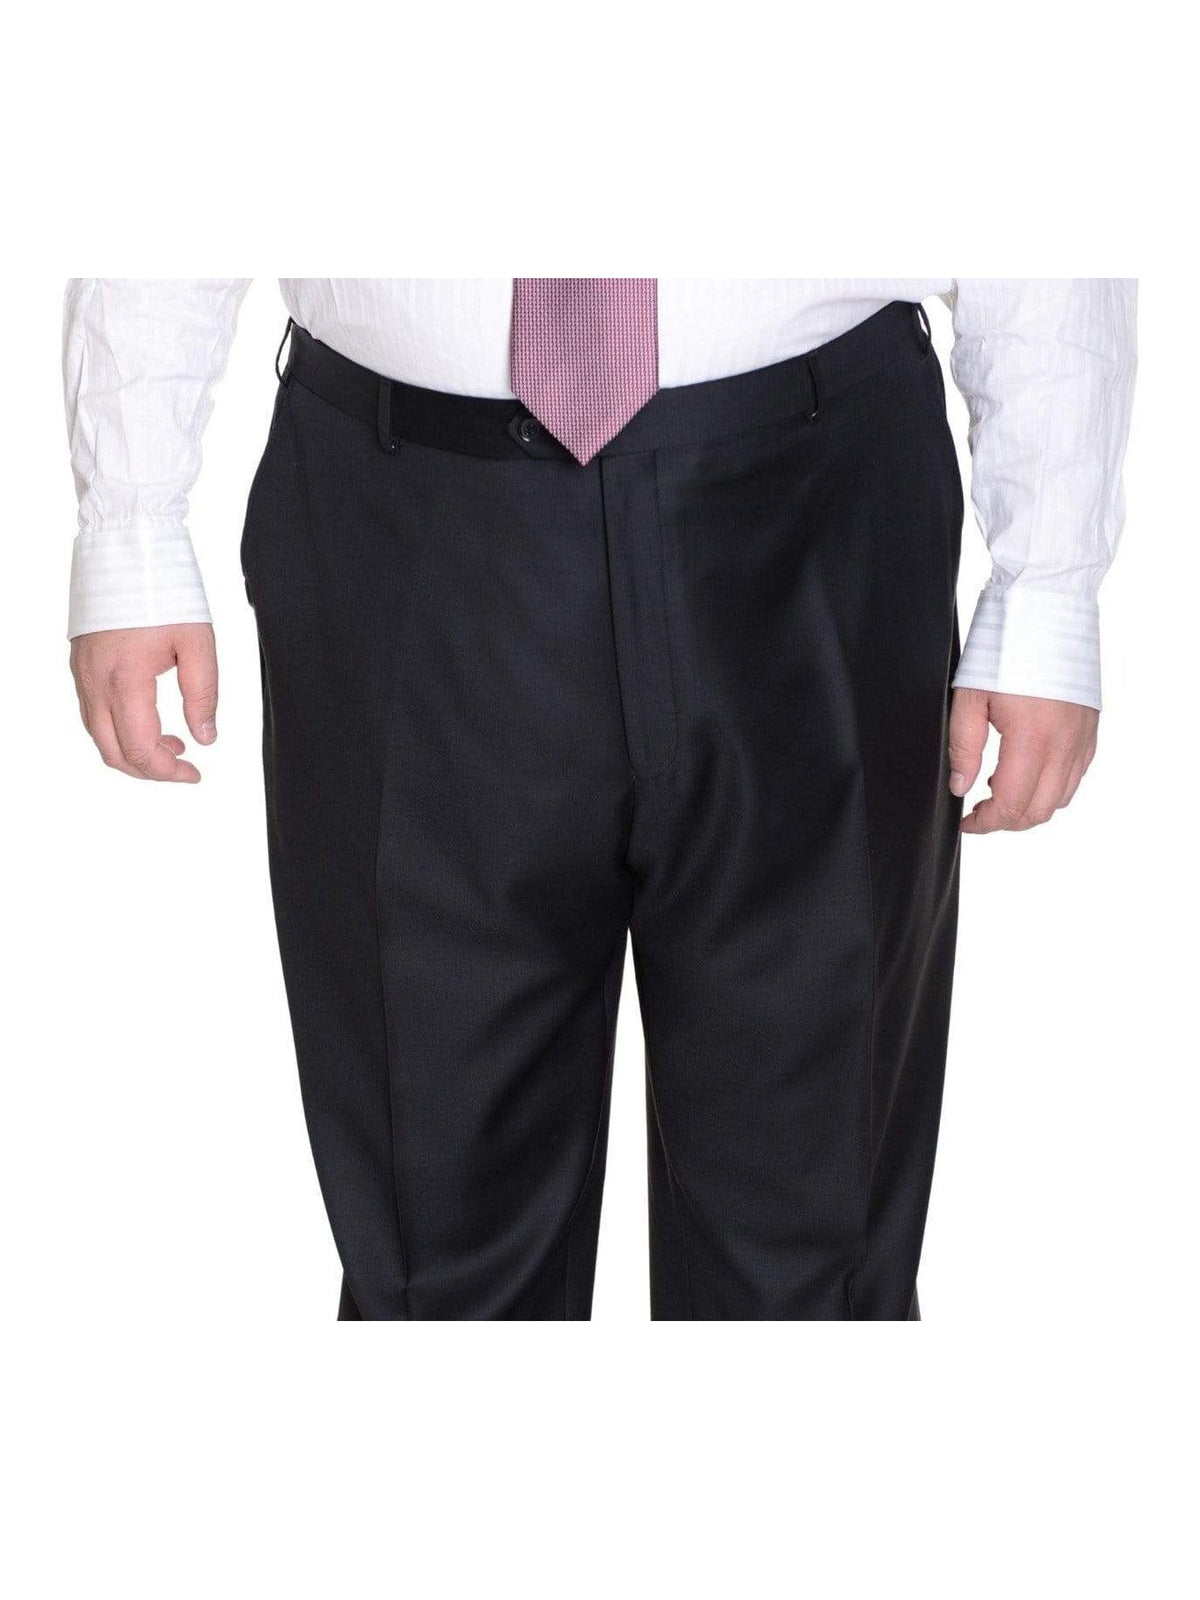 Label M PANTS Mens Portly Fit Solid Black Flat Front Wool Dress Pants